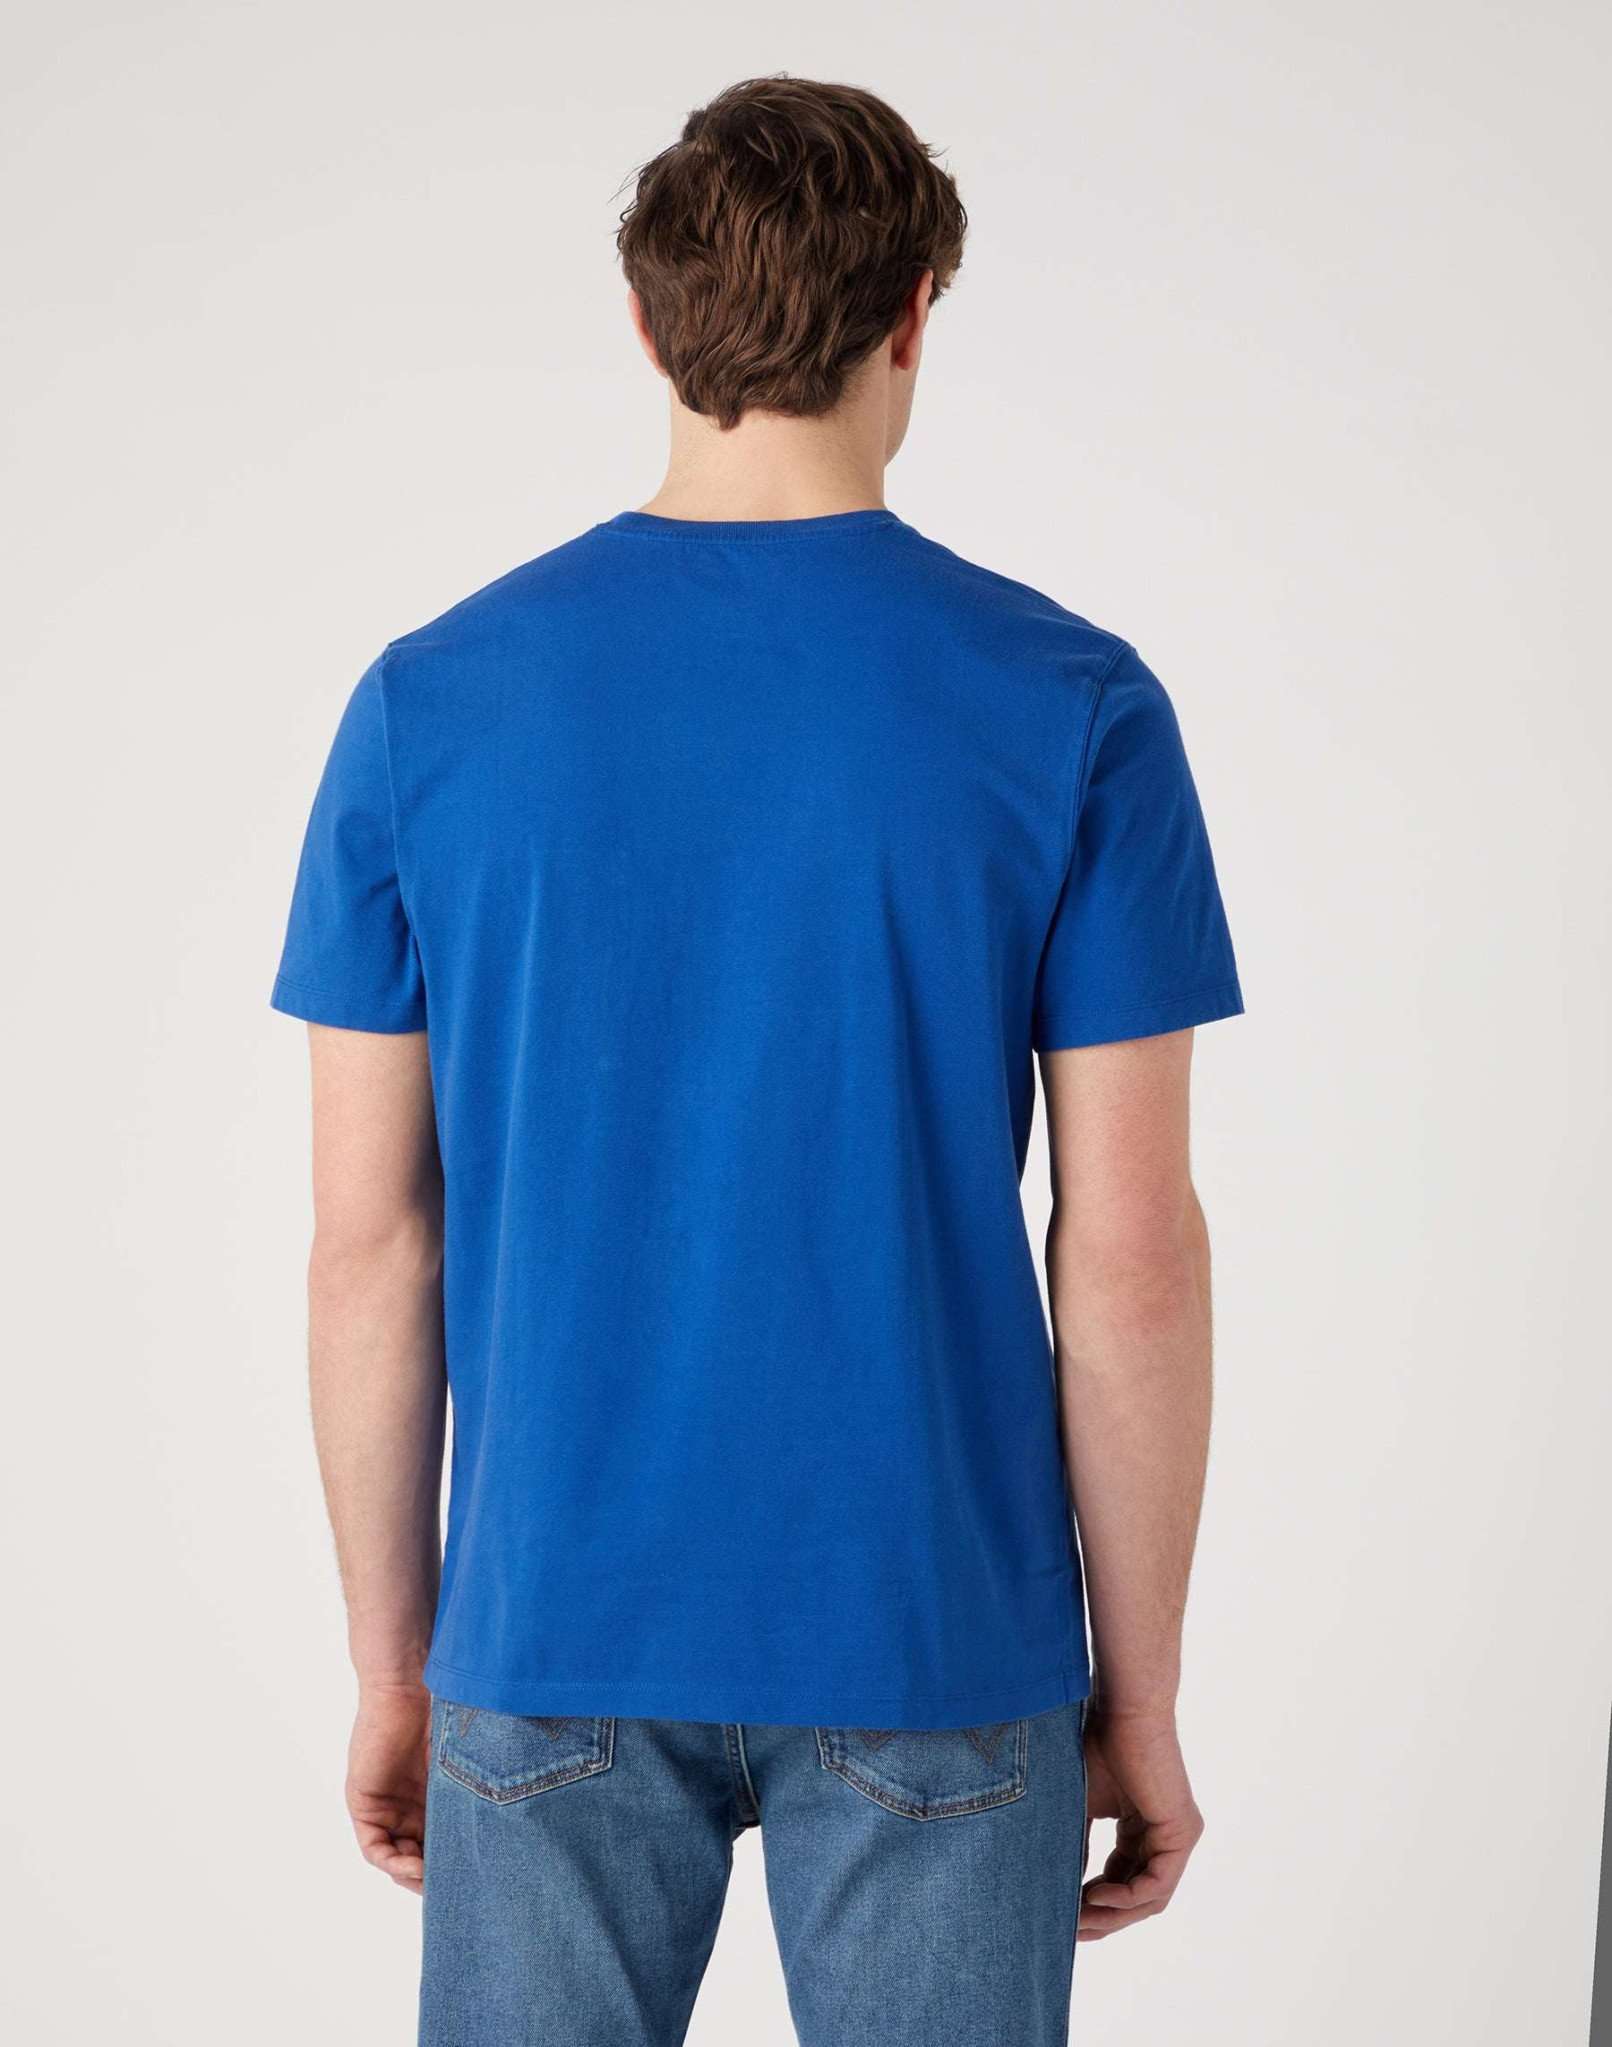 Pocket Tee in True Blue T-Shirts Wrangler   